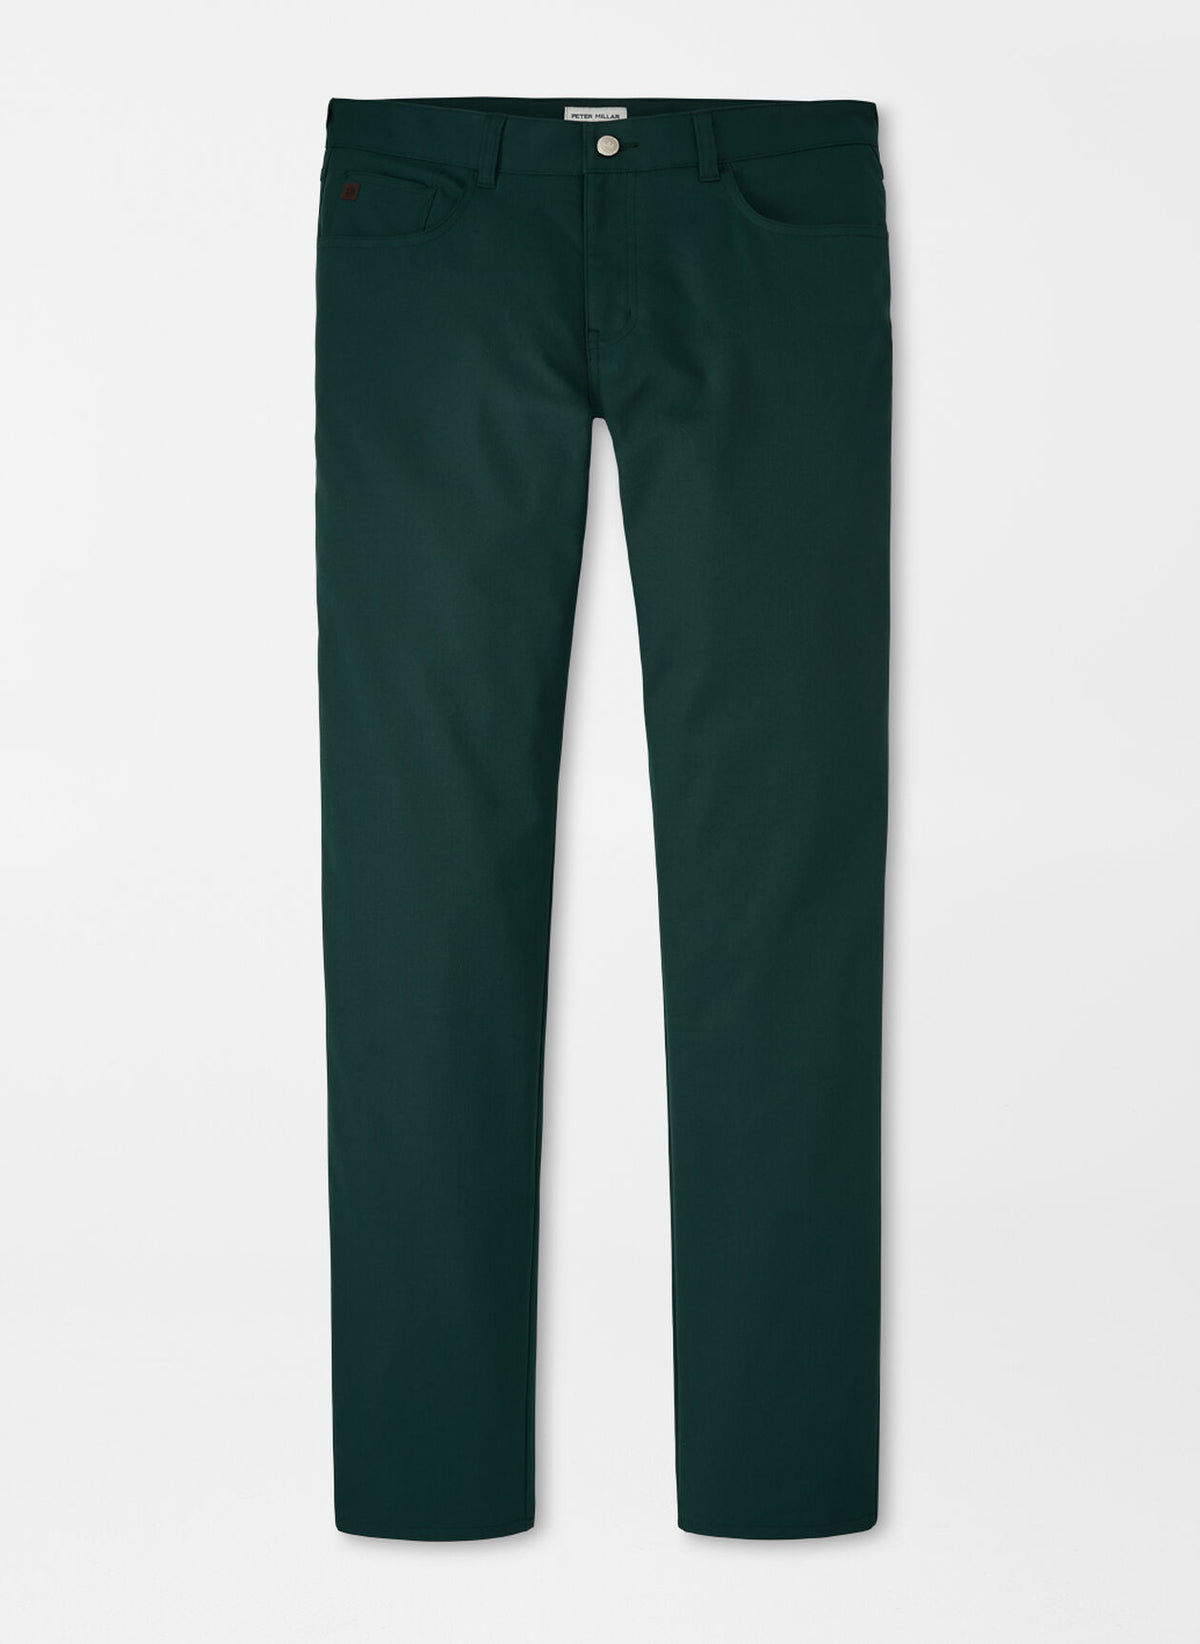 Peter Millar eb66 Perfromance Five-Pocket Golf Pants - Willow Mist